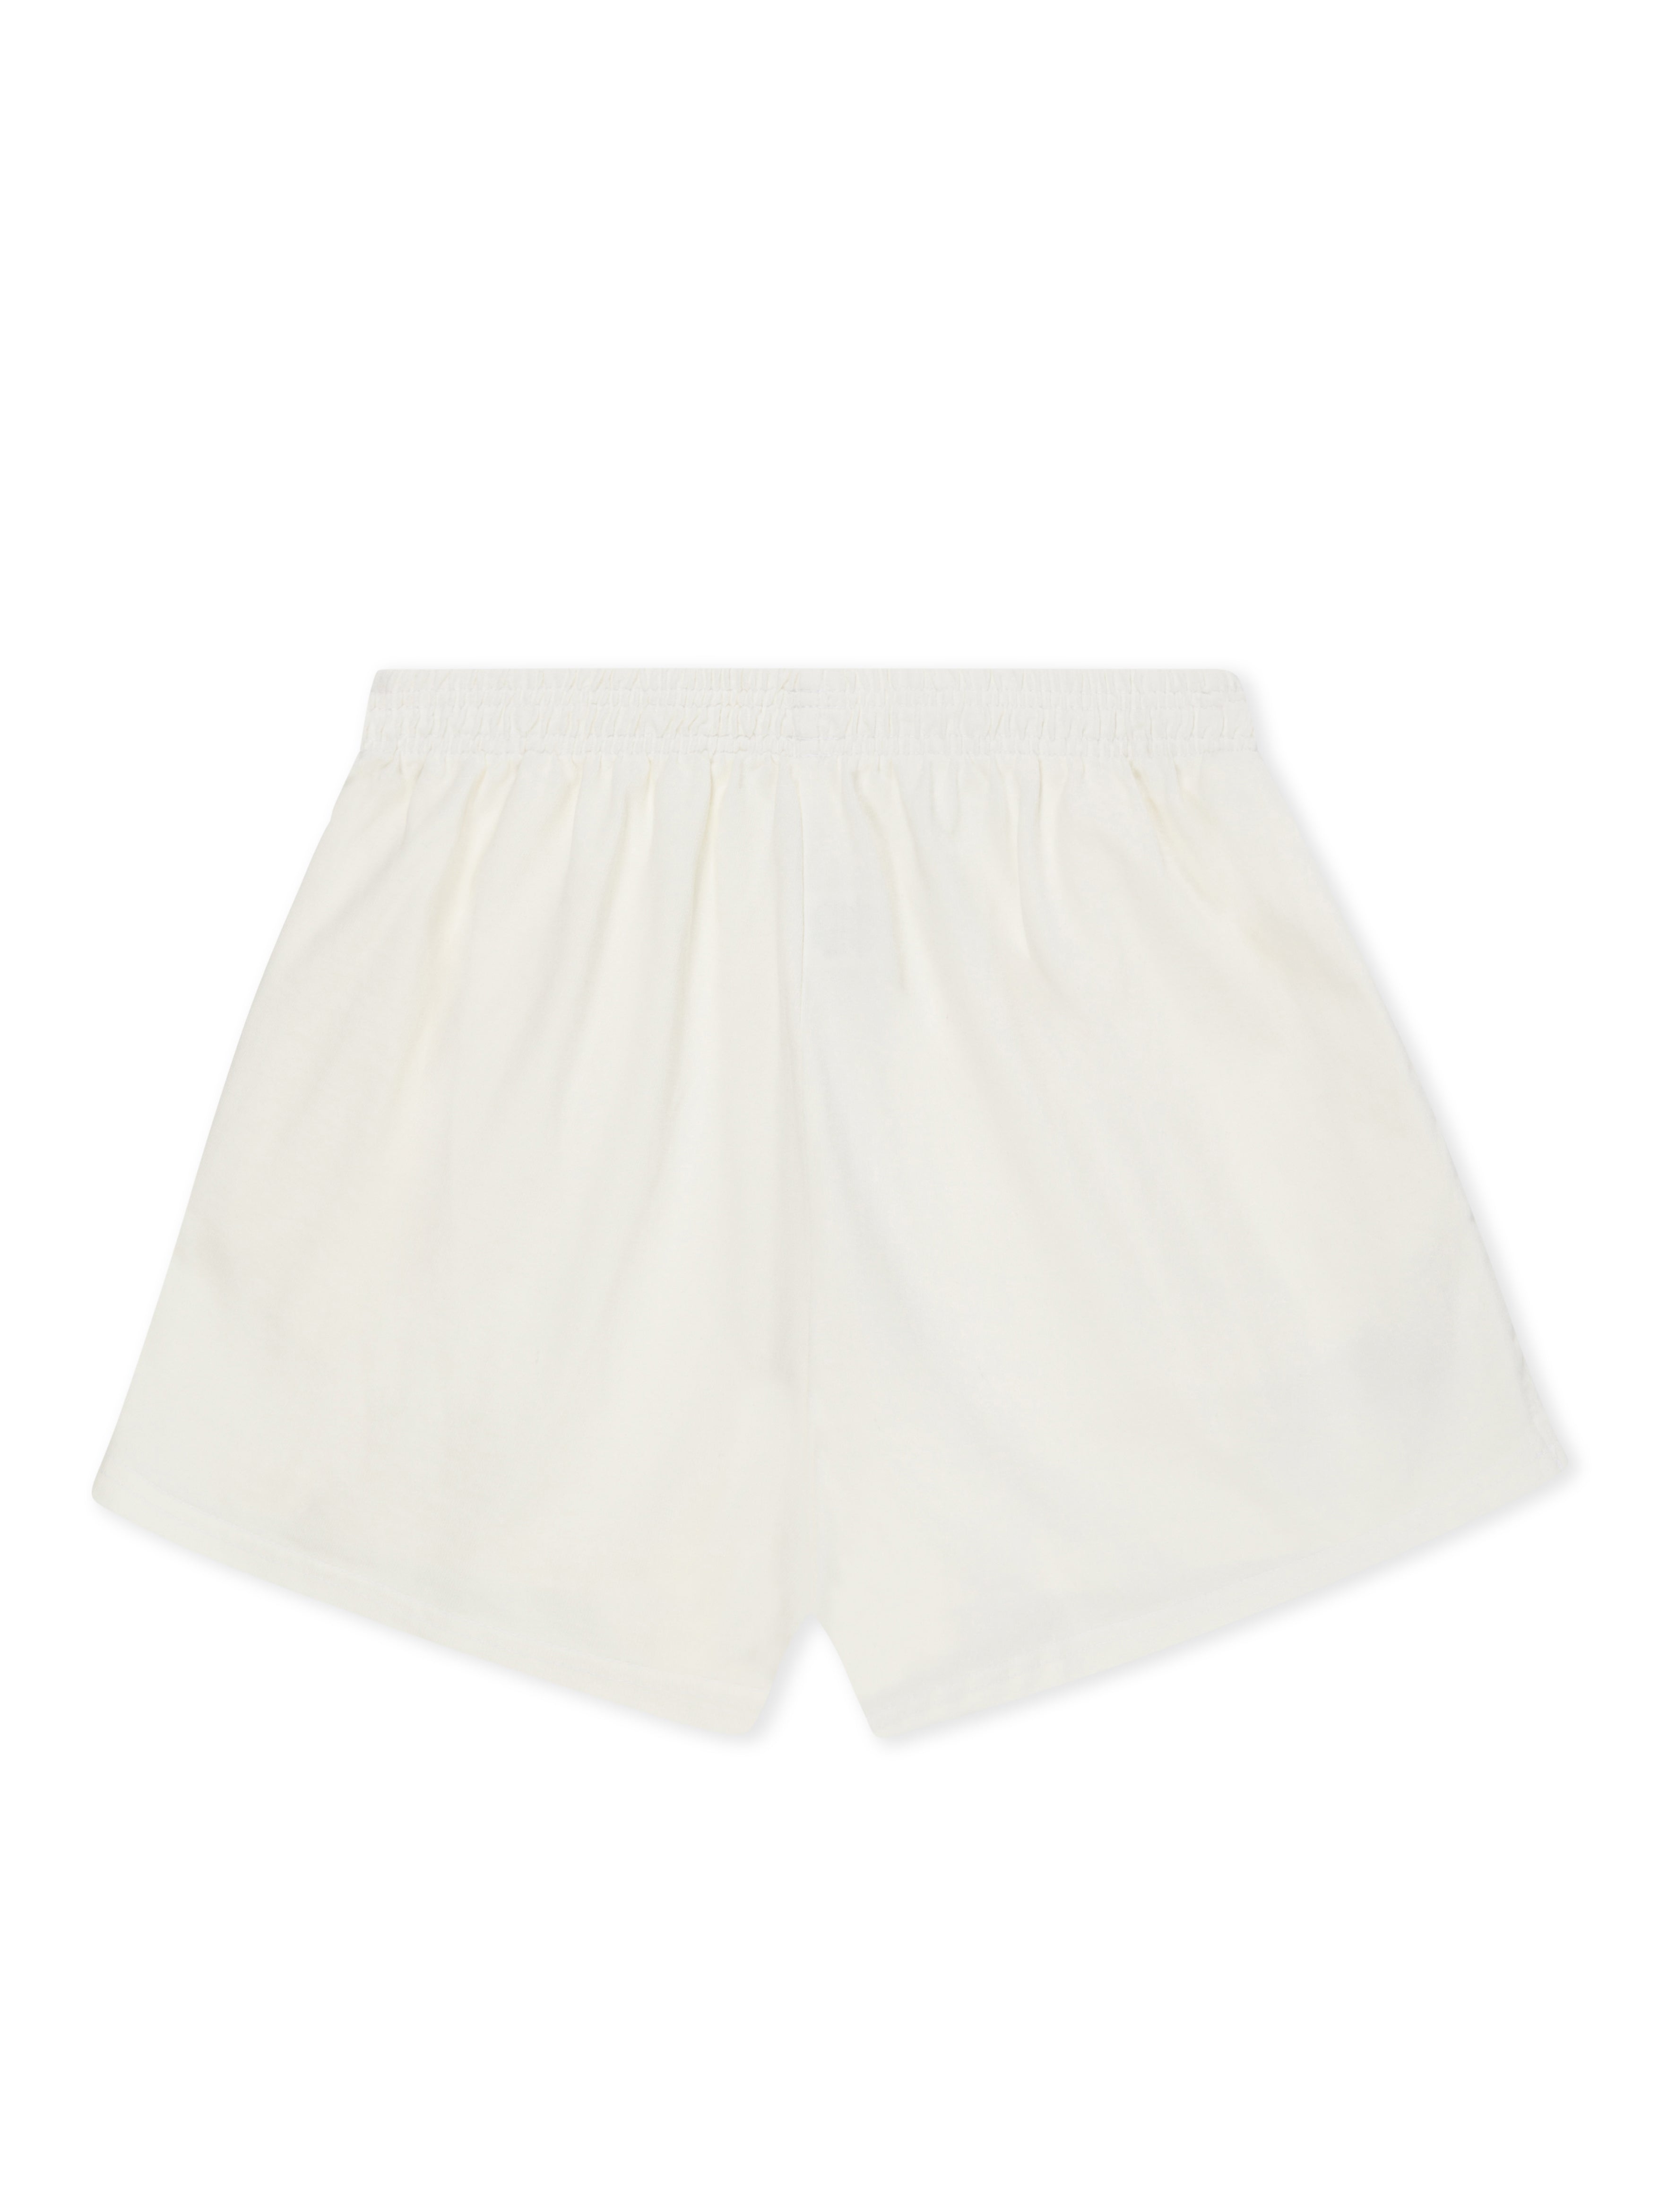 Women's Classic Sol Short, White